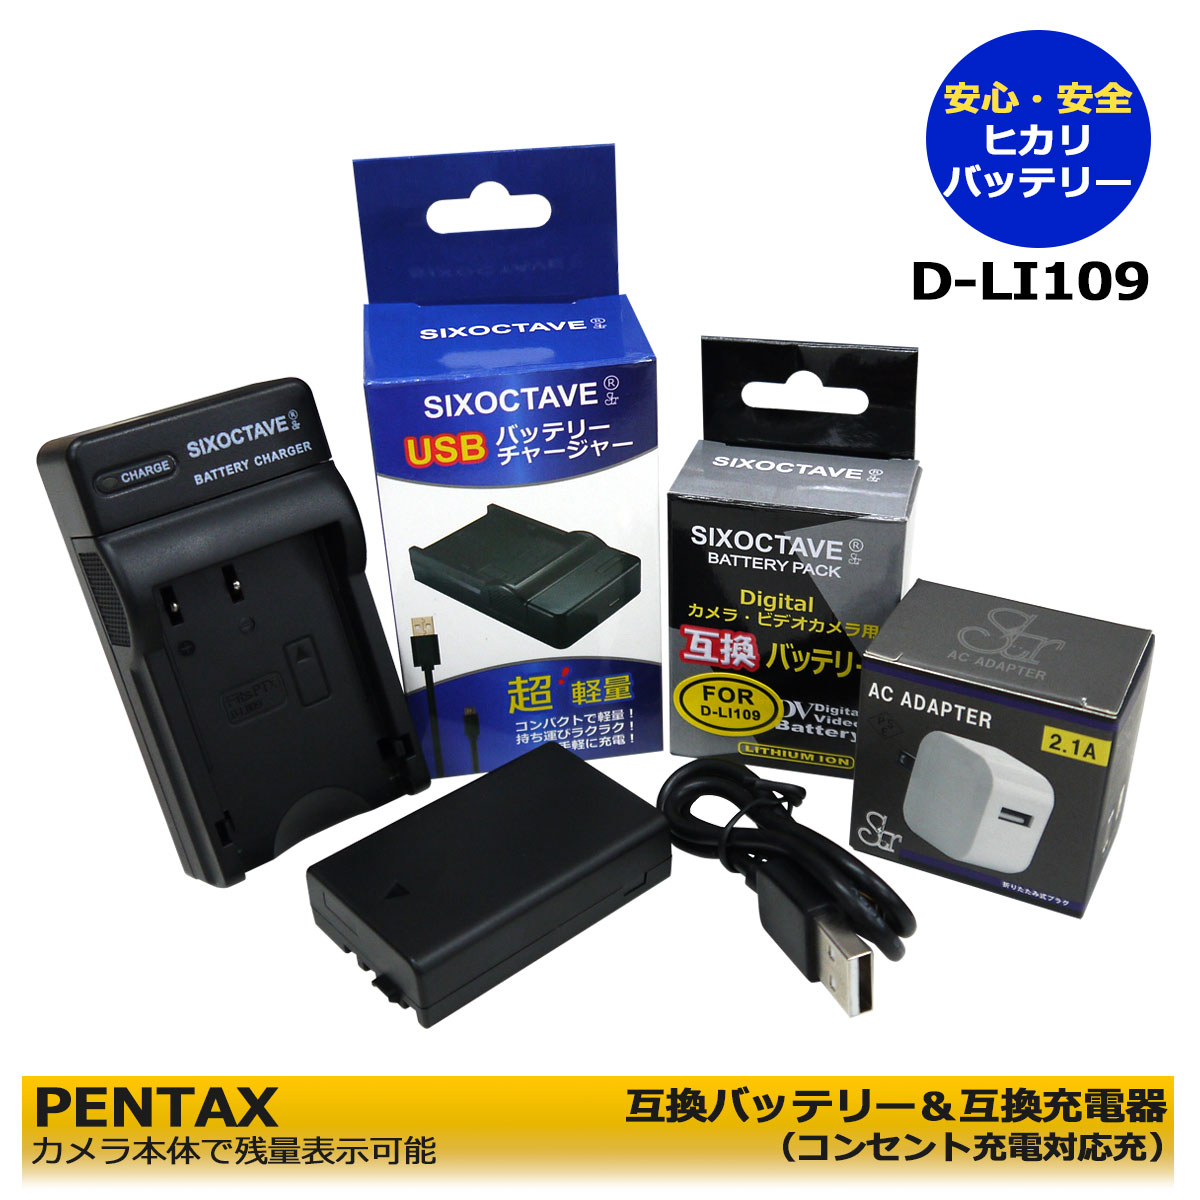 D-LI109 【送料無料】Pentax 互換バッテ